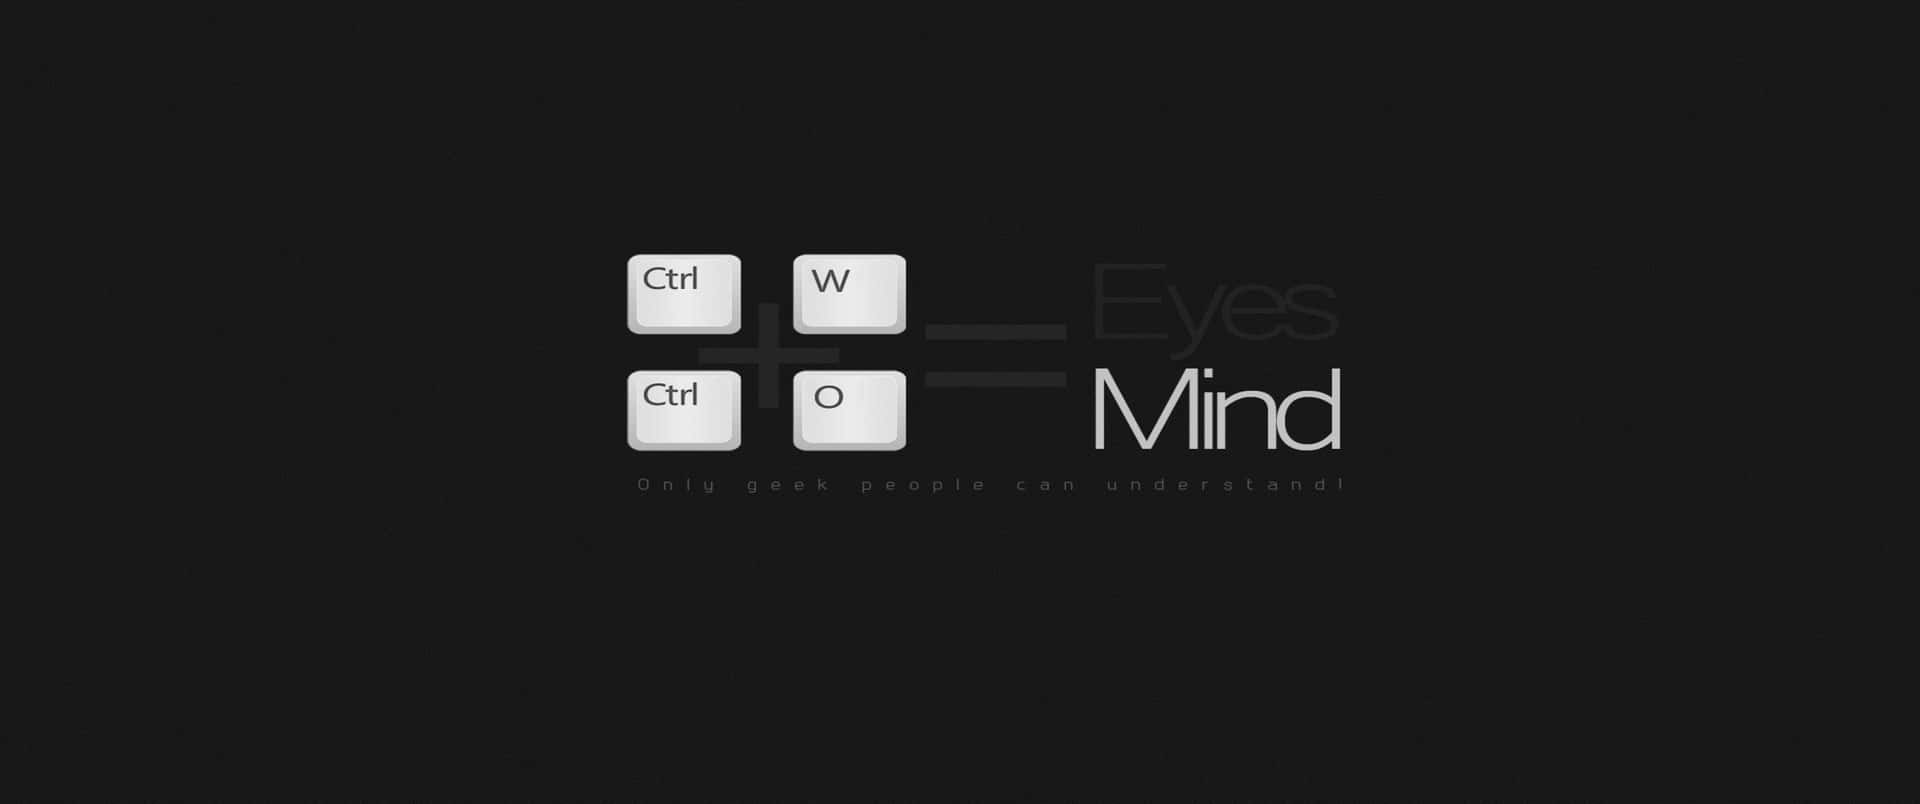 Eyes Mind - Wallpaper - Hd